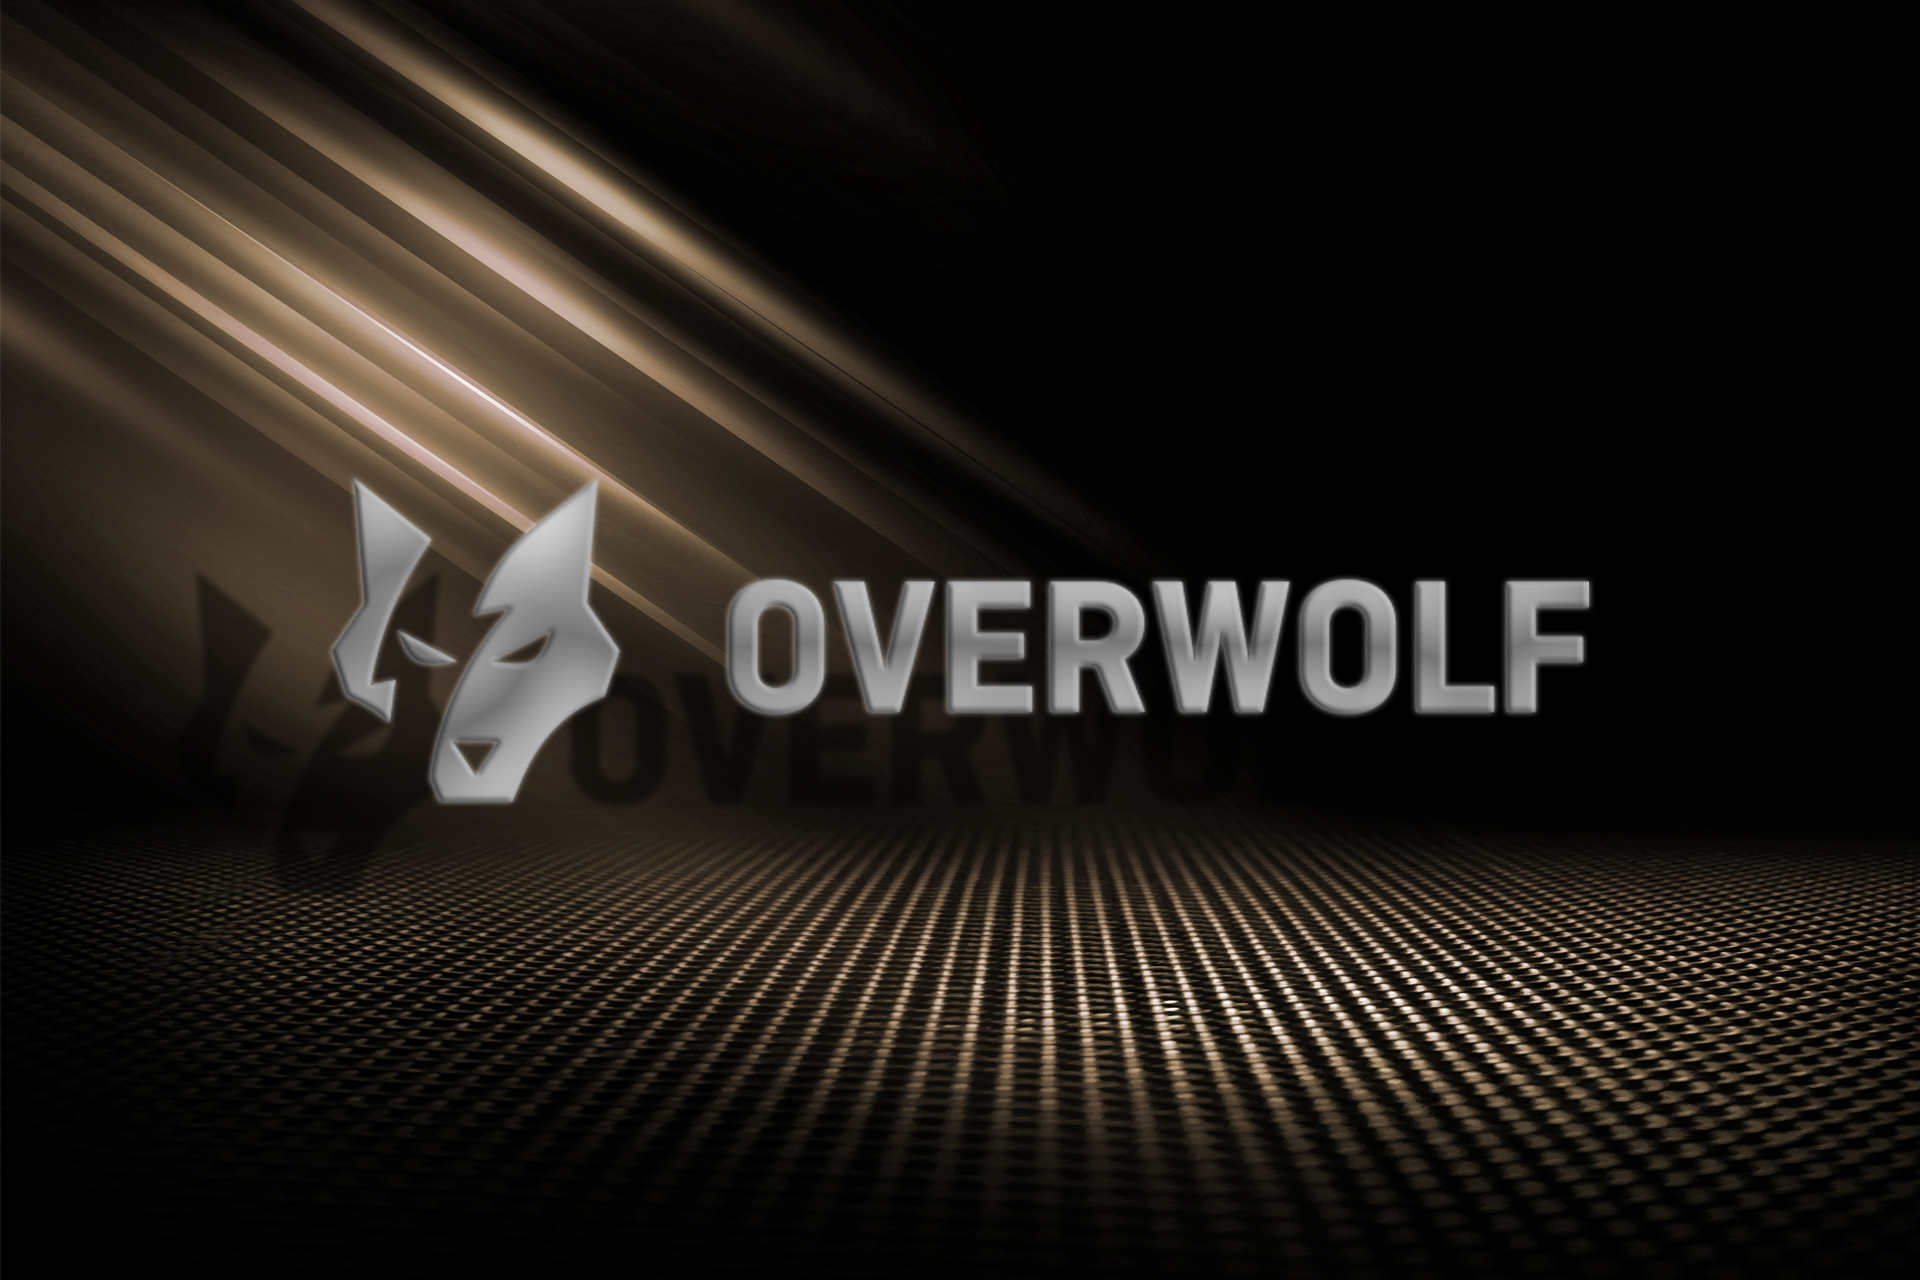 Overwolf not recording fixes